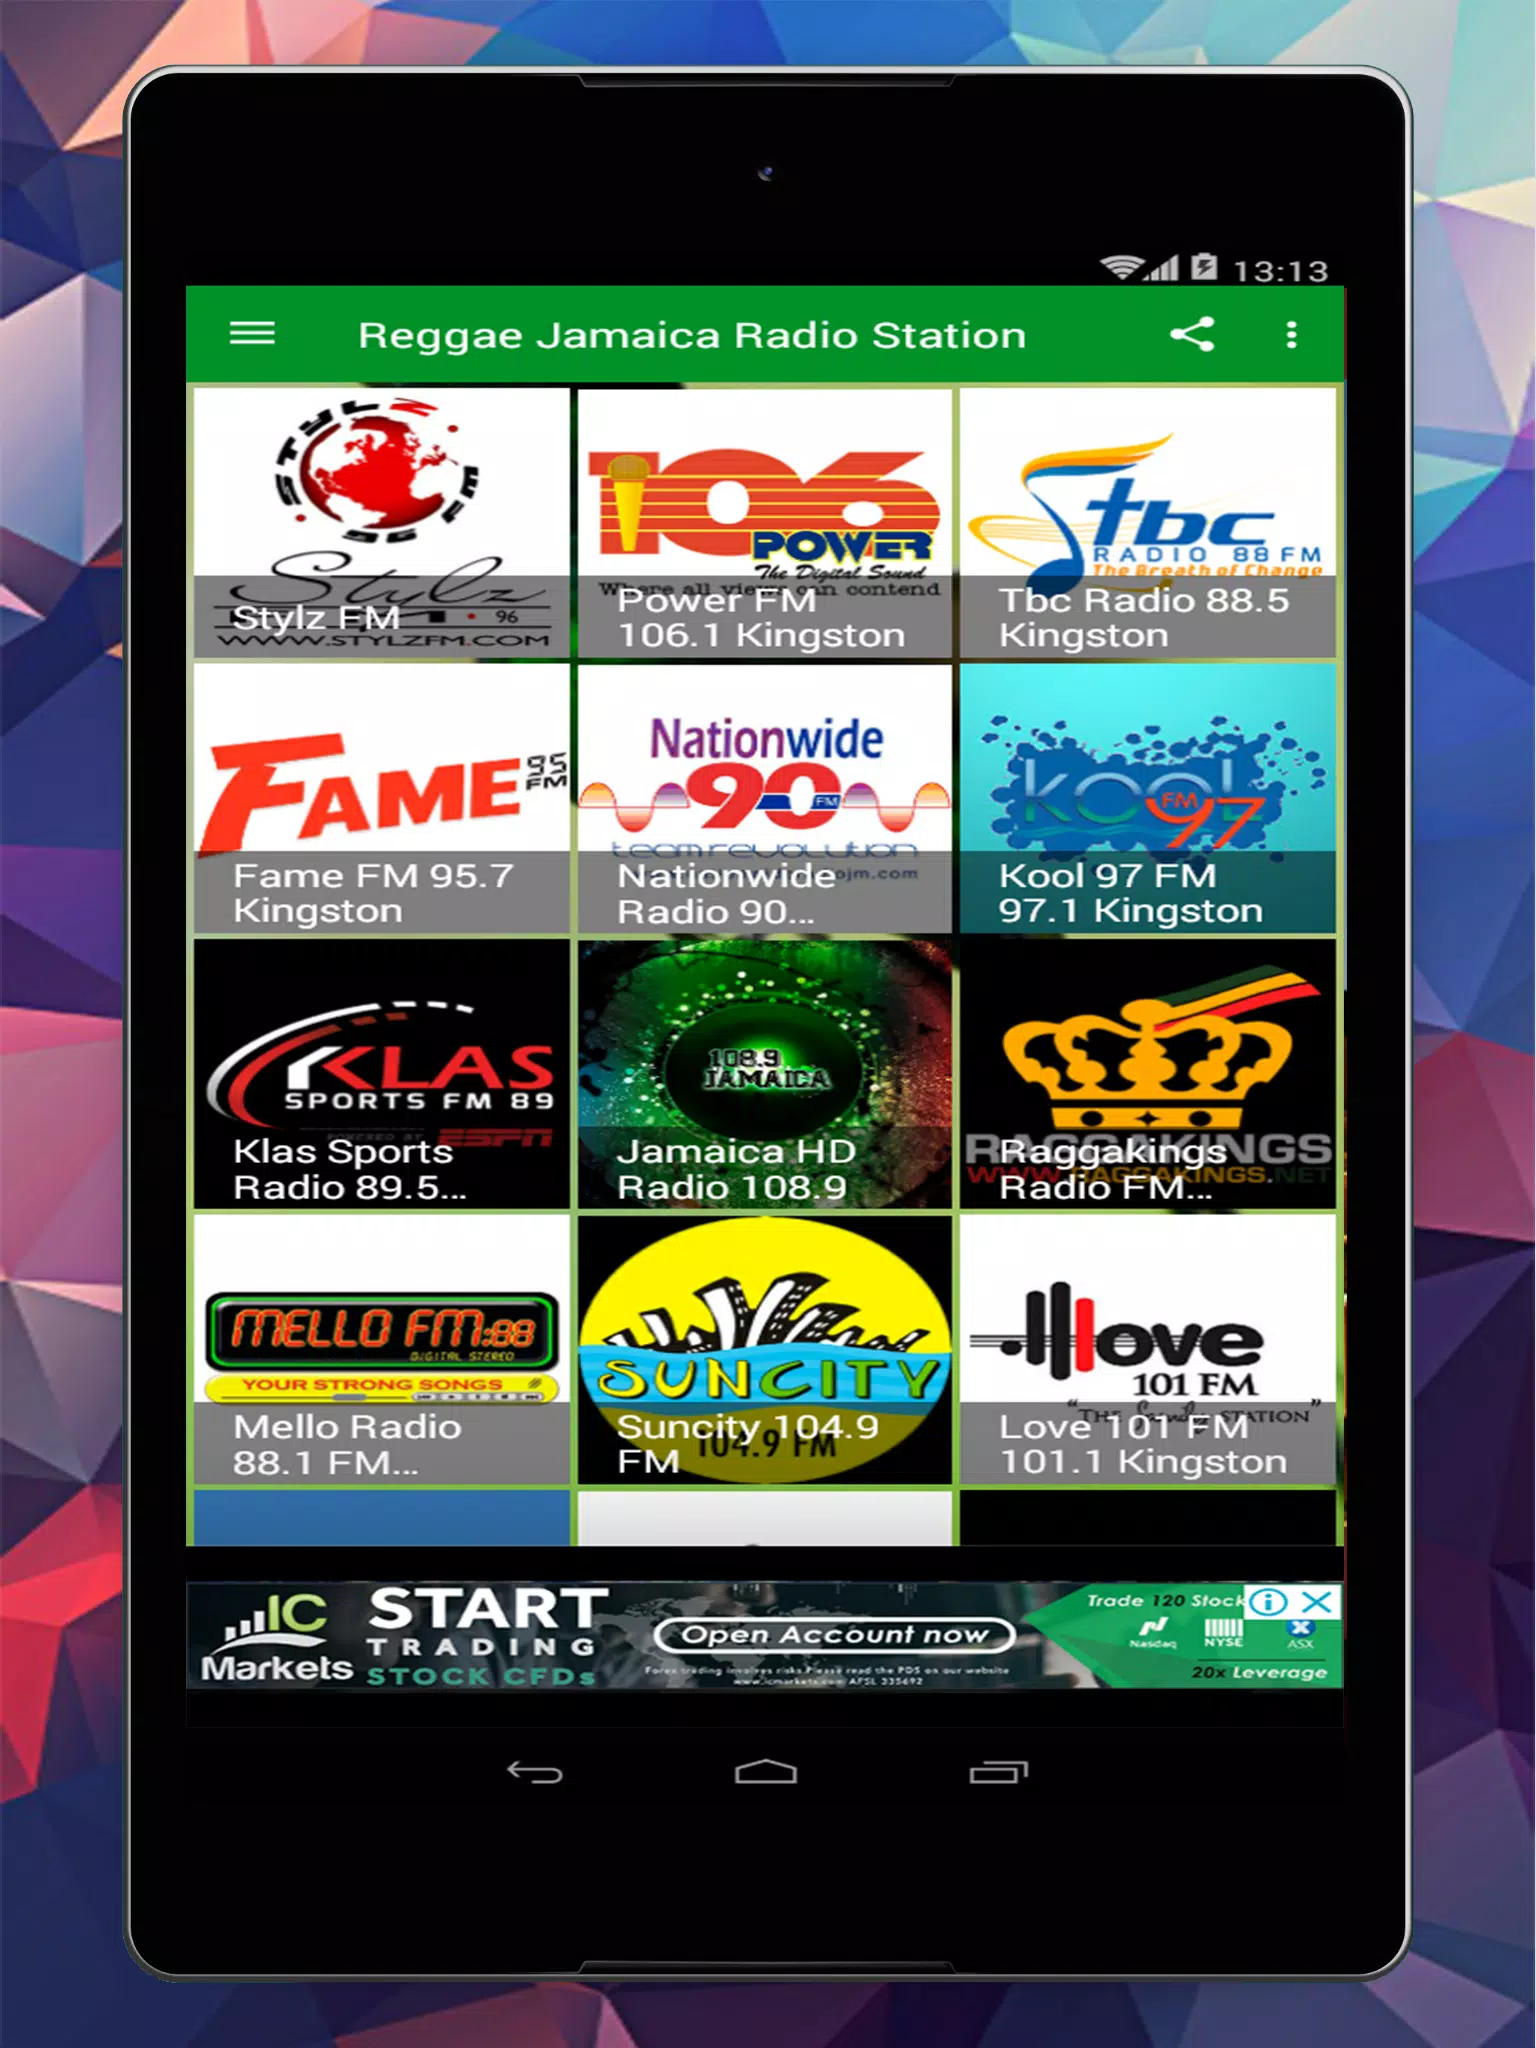 Reggae Jamaica Radio Station APK for Android Download